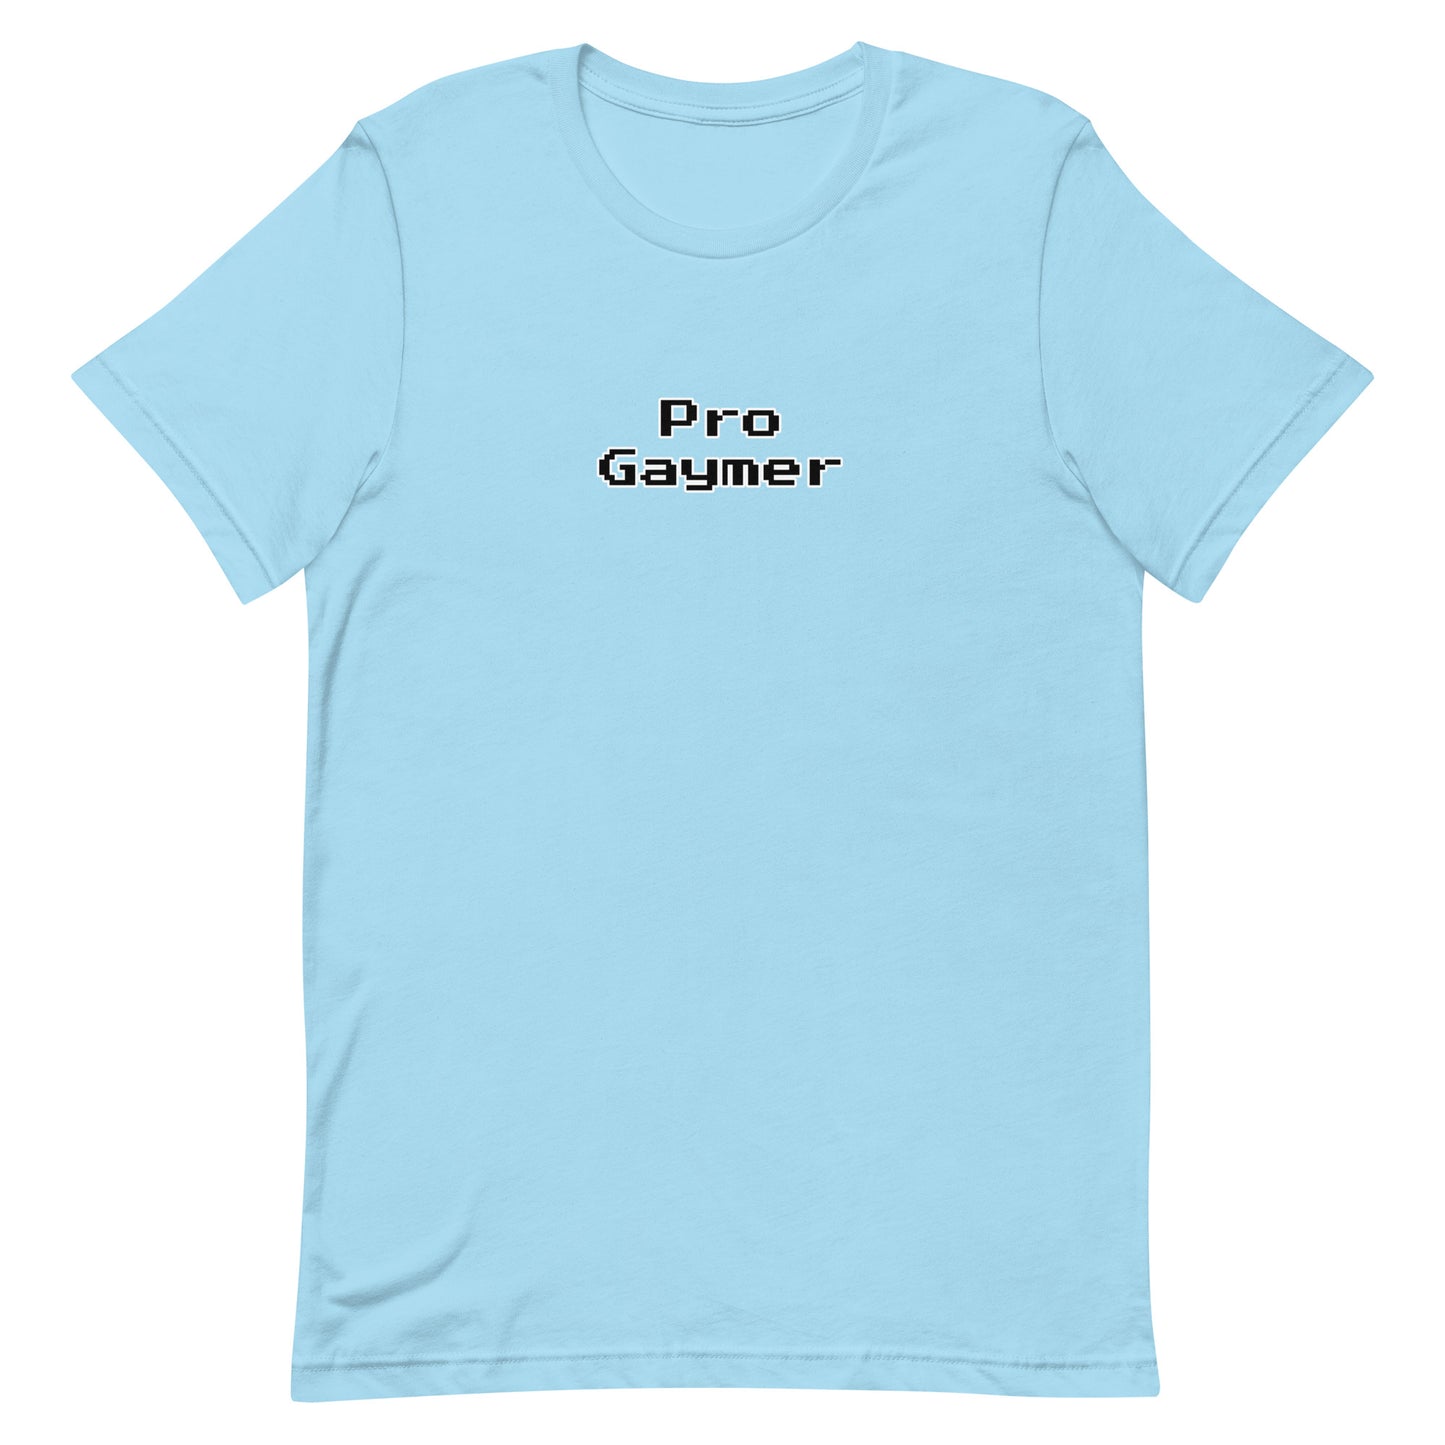 Pro Gaymer - T-Shirt (B) - Solid colors